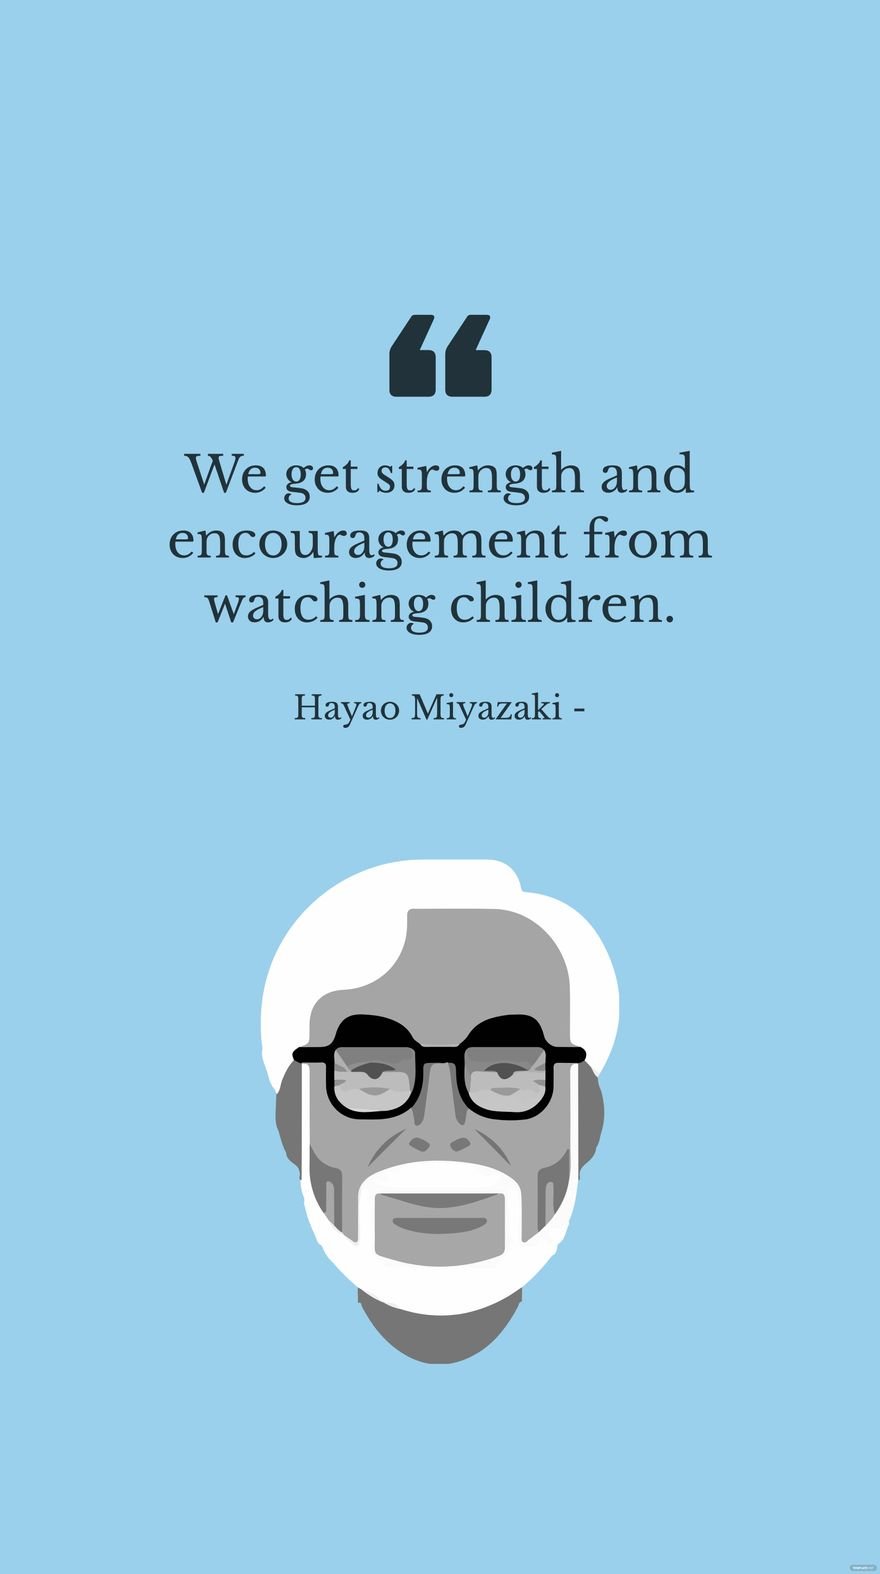 Free Hayao Miyazaki - We get strength and encouragement from watching children. in JPG